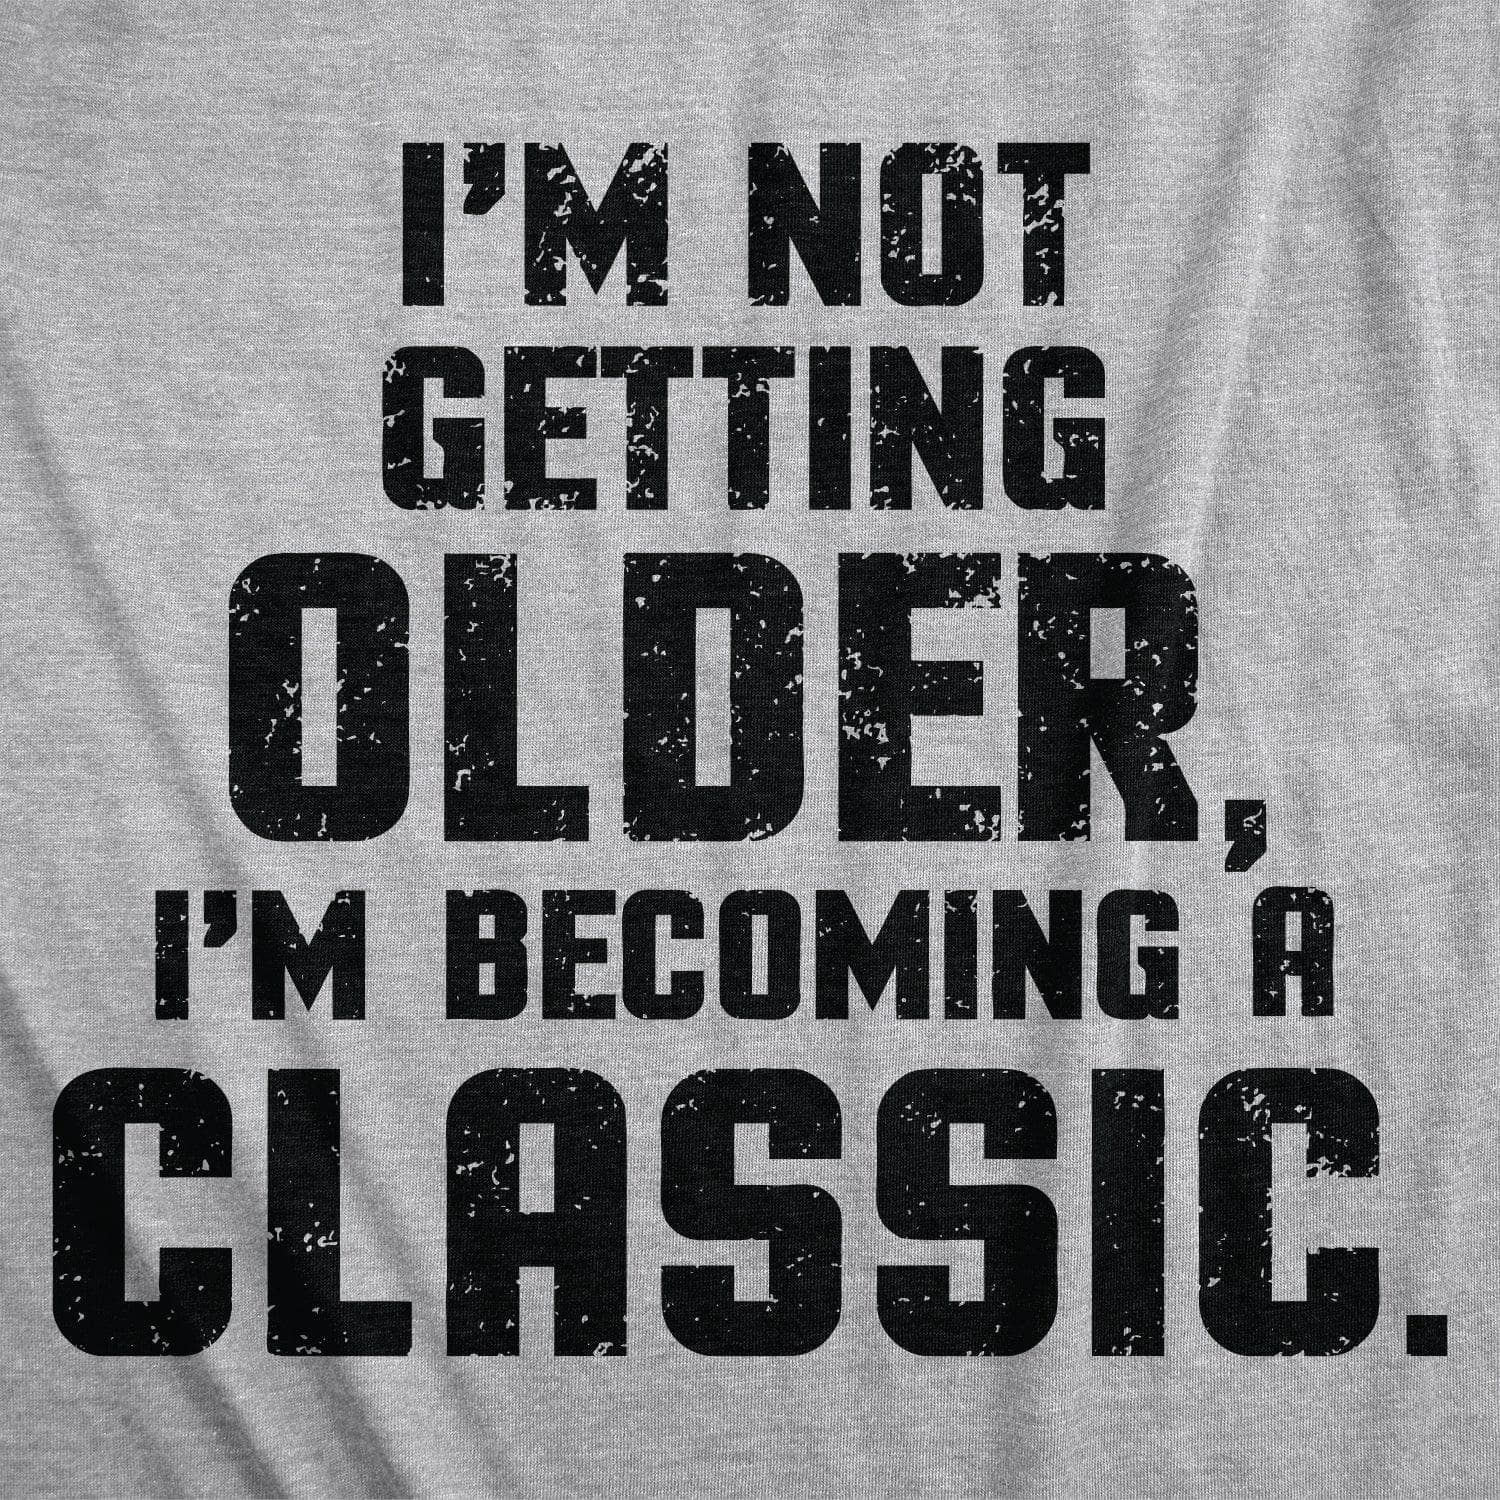 I'm Not Getting Older I'm Becoming A Classic Men's Tshirt  -  Crazy Dog T-Shirts